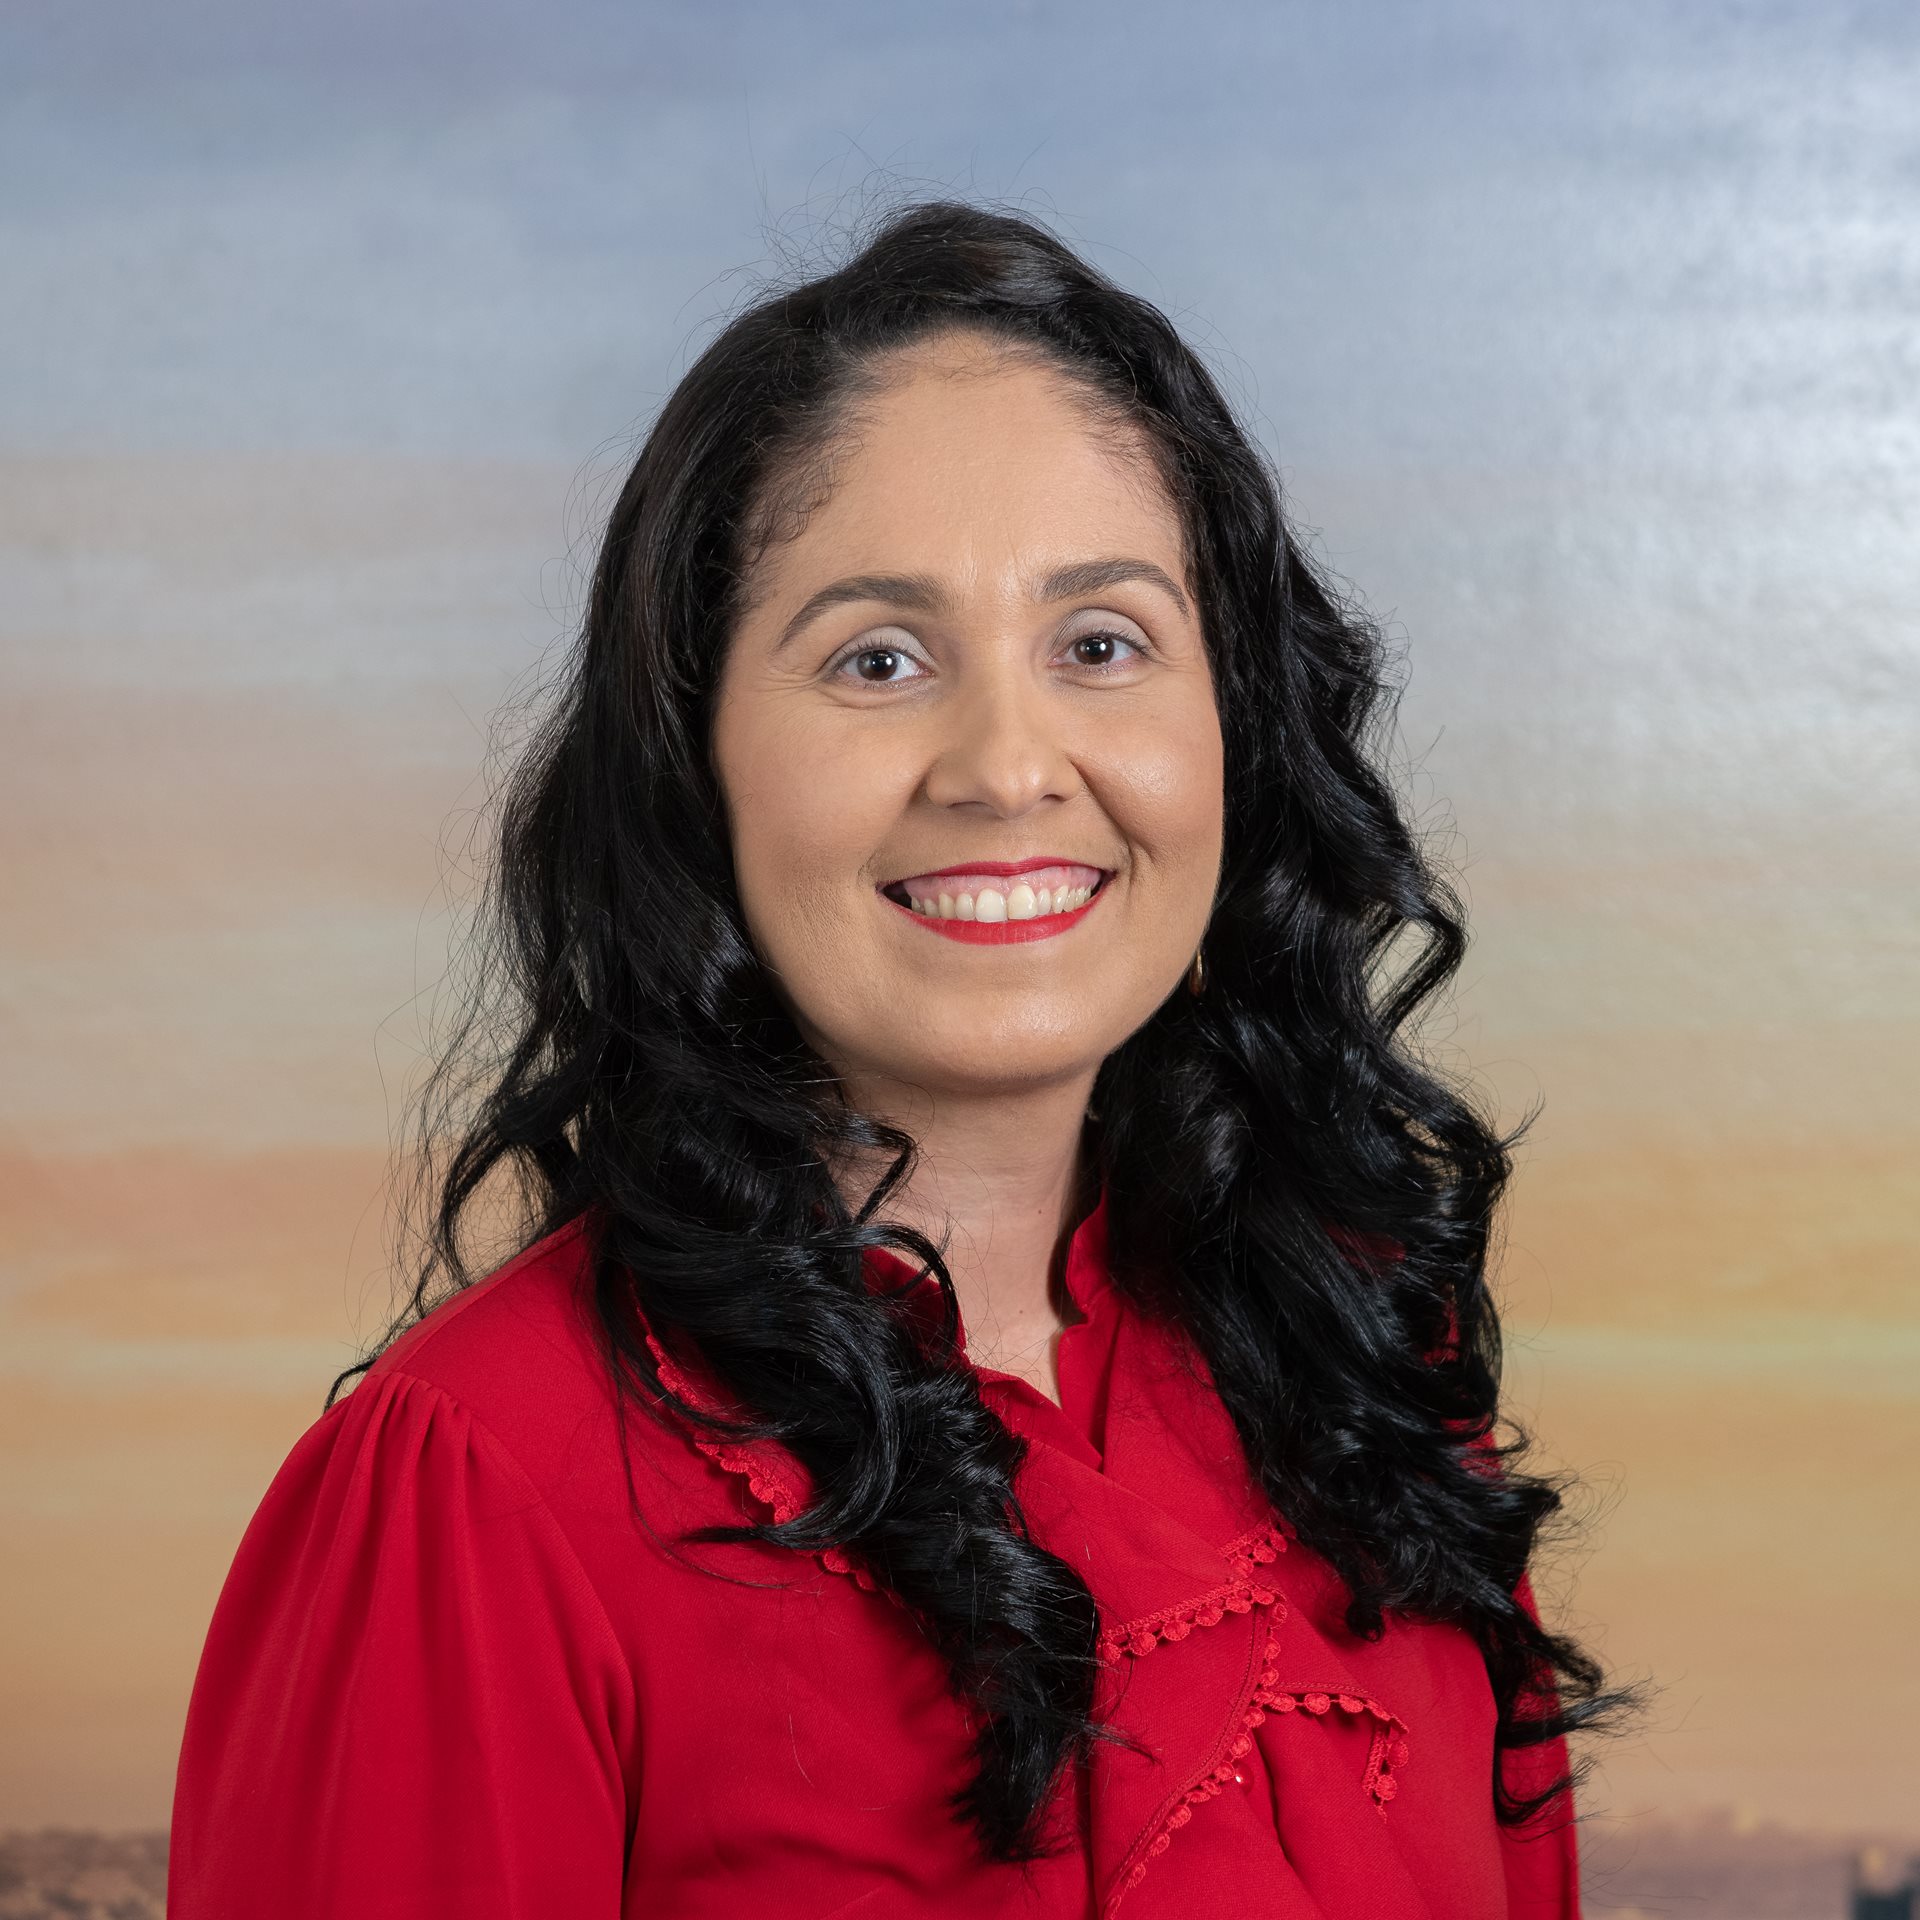 Sonia Moniz de Faria, Senior Financial Analyst